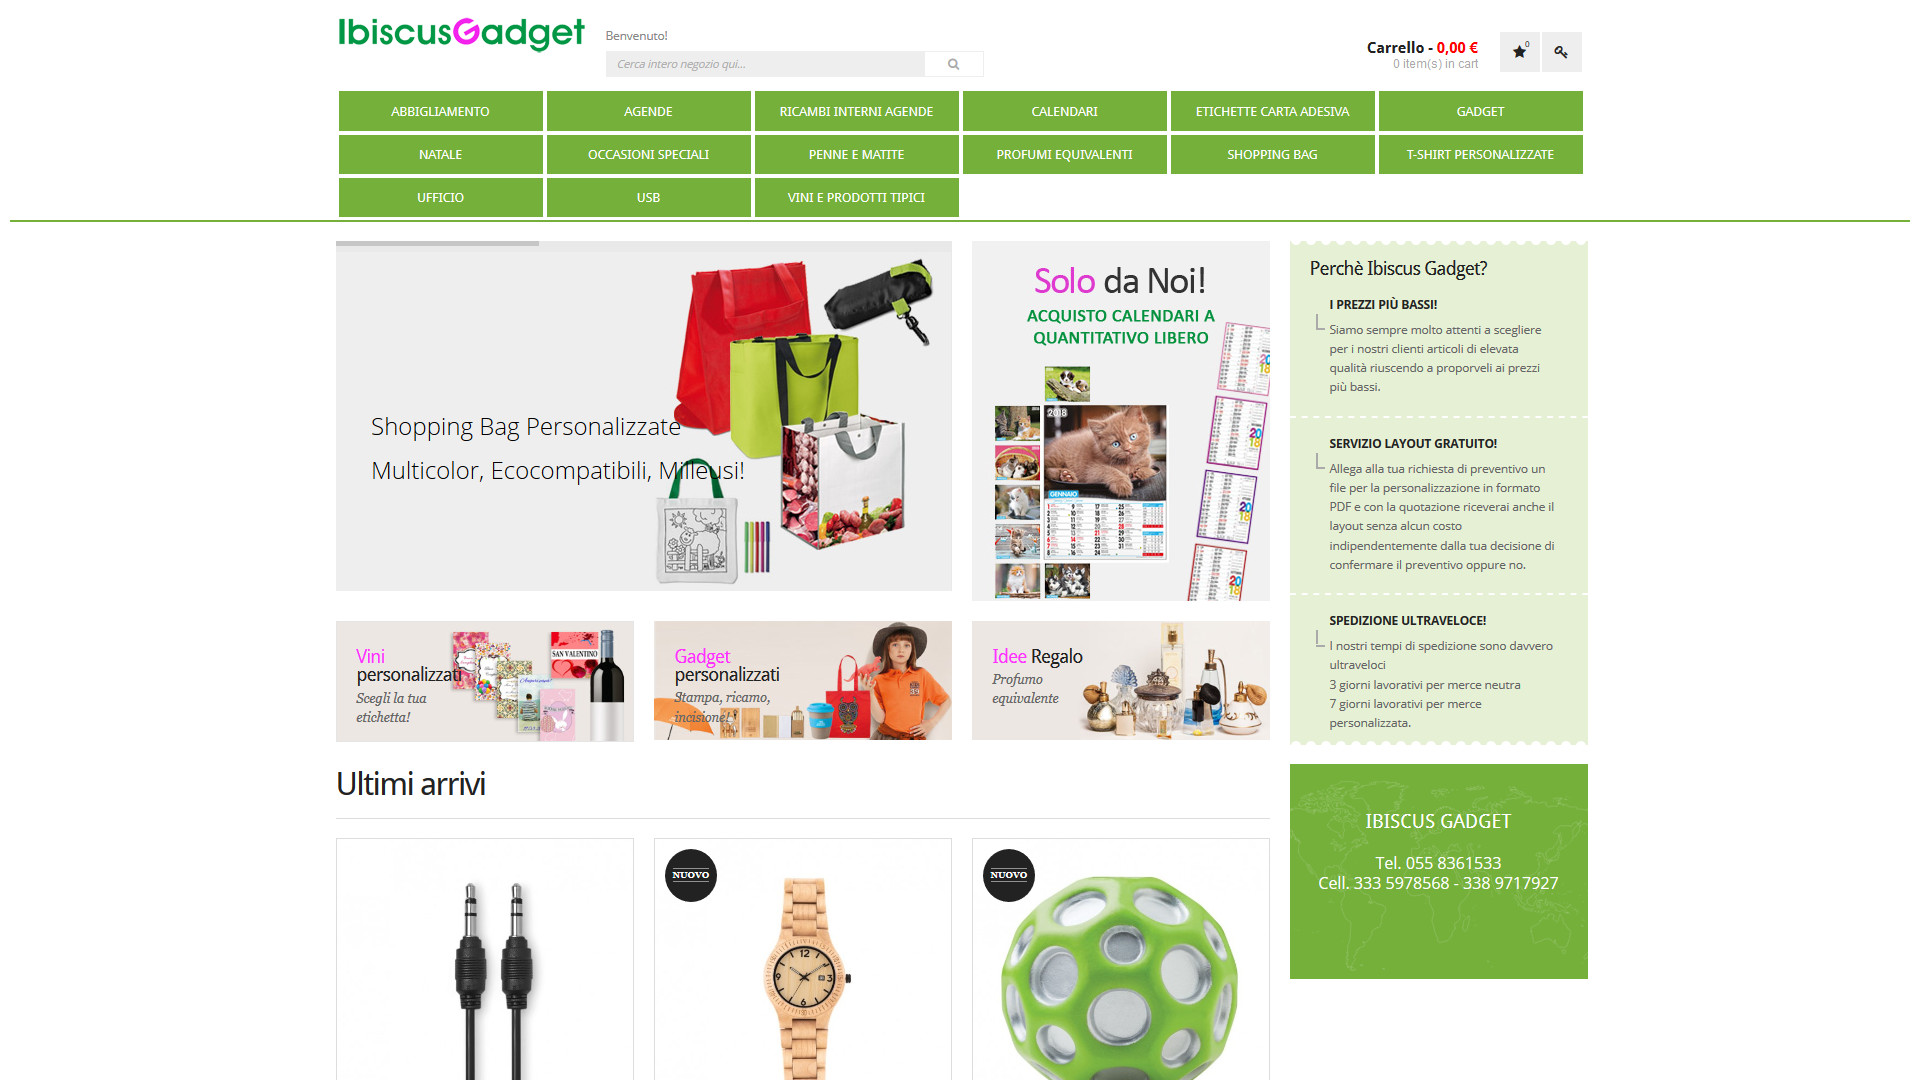 Gadget: shopping bag, calendari, vini - Ibuscus Gadget